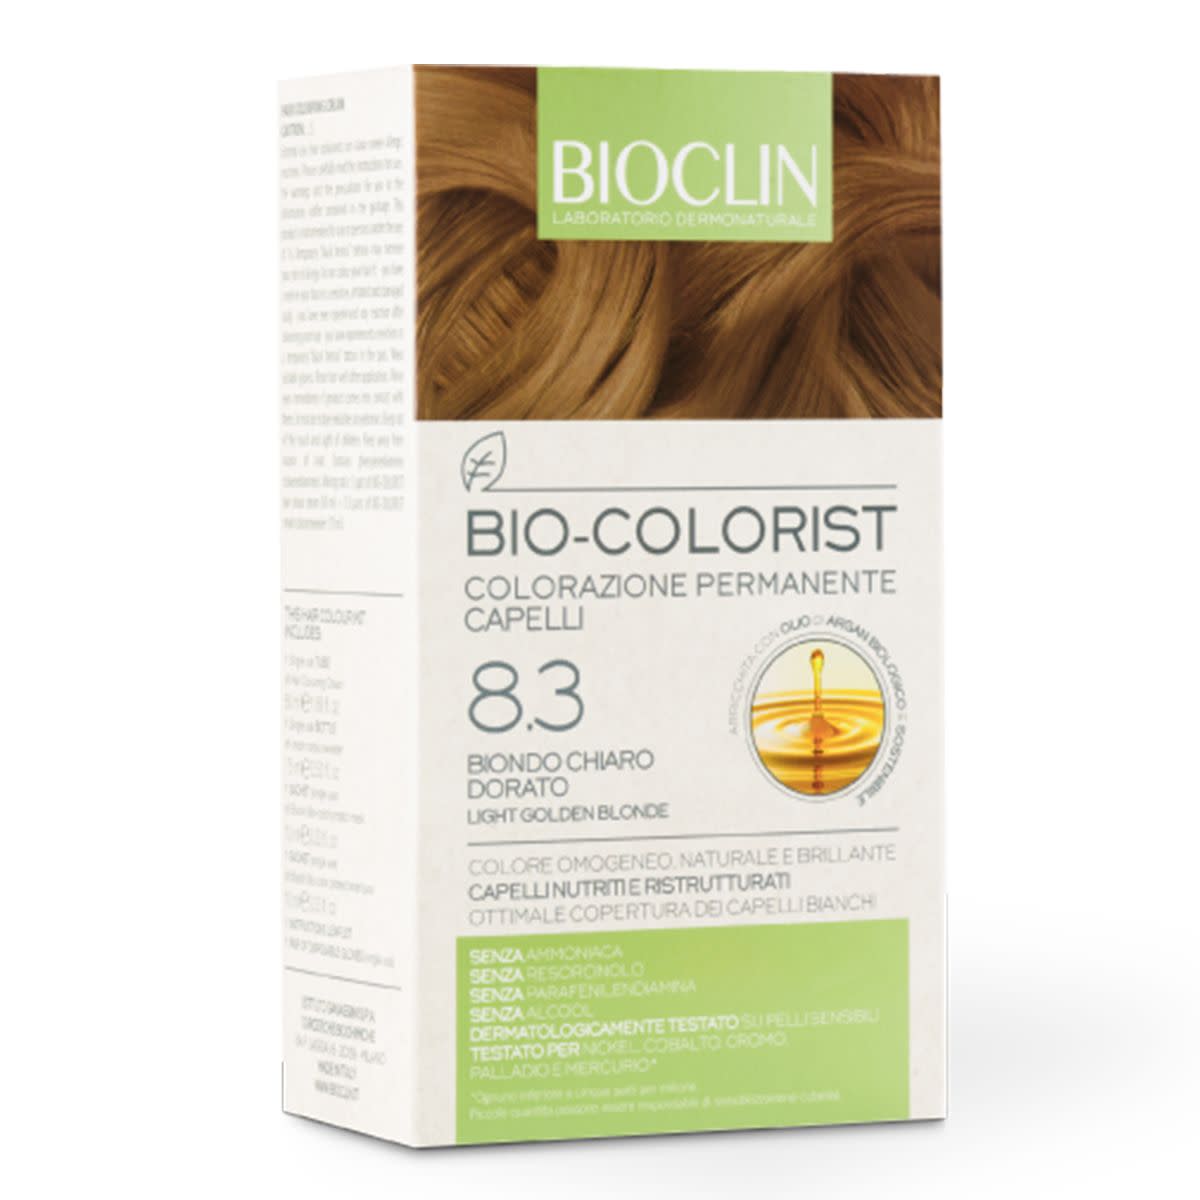 975025141 - Bioclin Bio-colorist 8.3 Biondo Chiaro Chiaro Dorato - 4702431_2.jpg